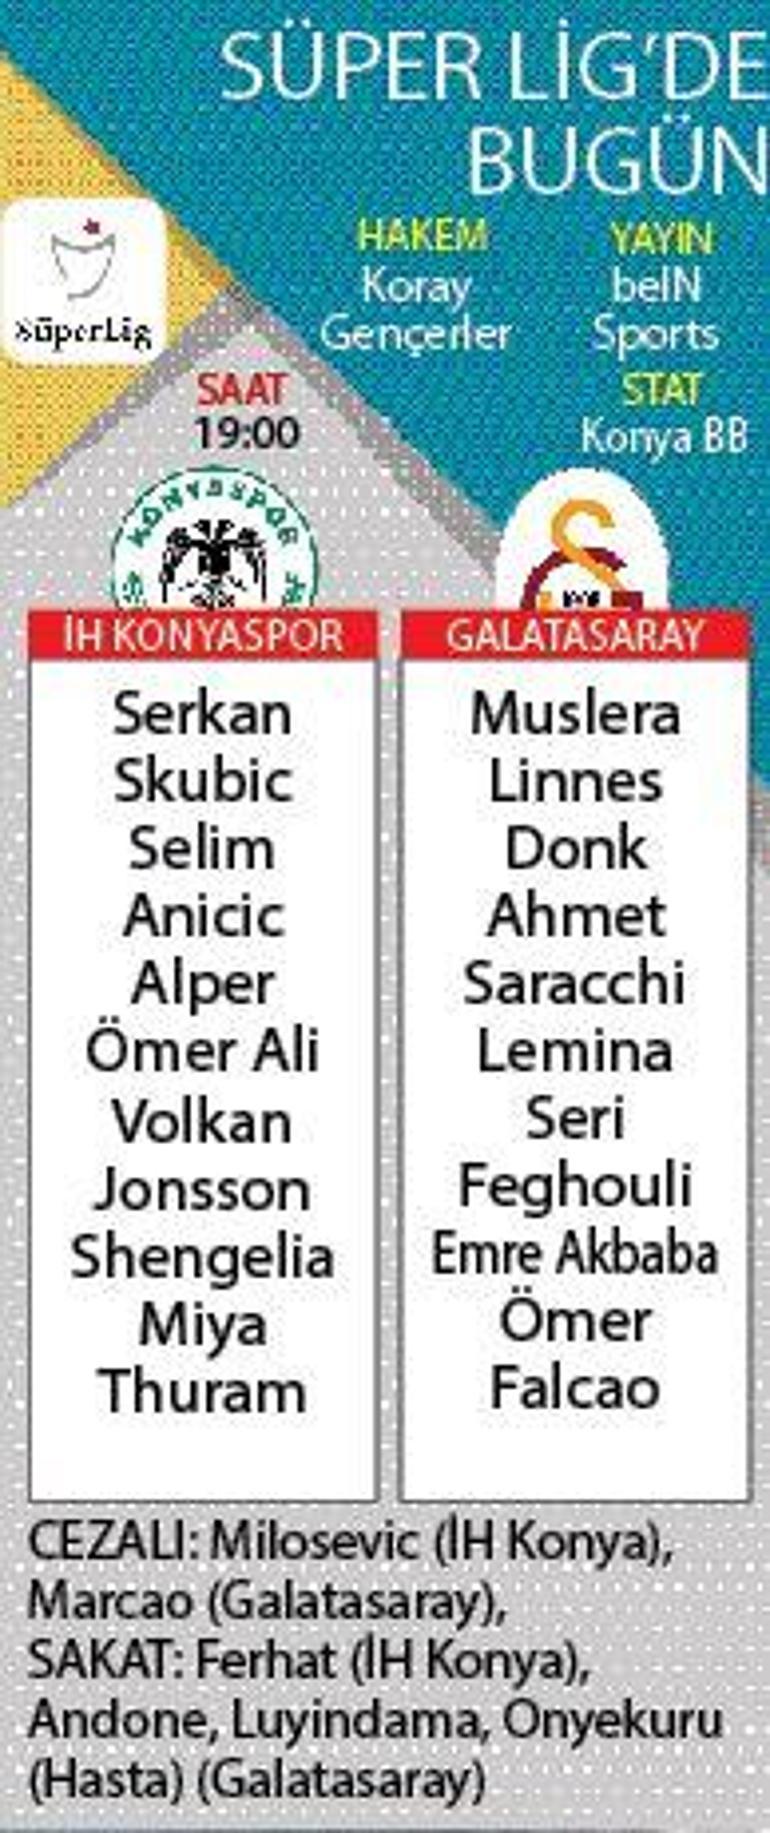 Galatasaray 10 yabancıyla gitti Konyaspor maçı...